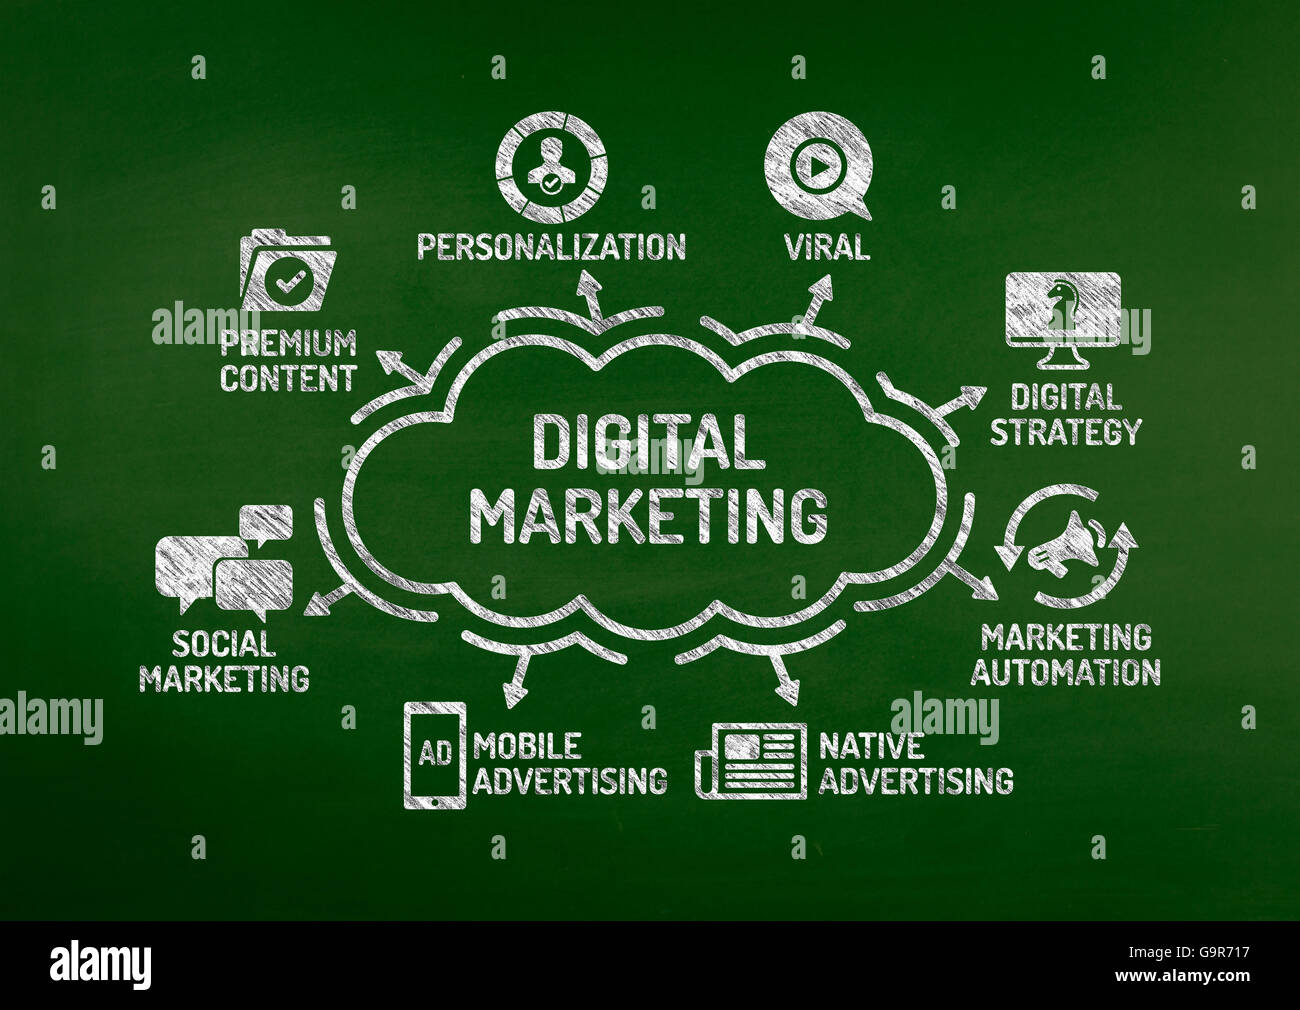 Digital Marketing Chart with keywords and icons on blackboard Stock Photo - Alamy